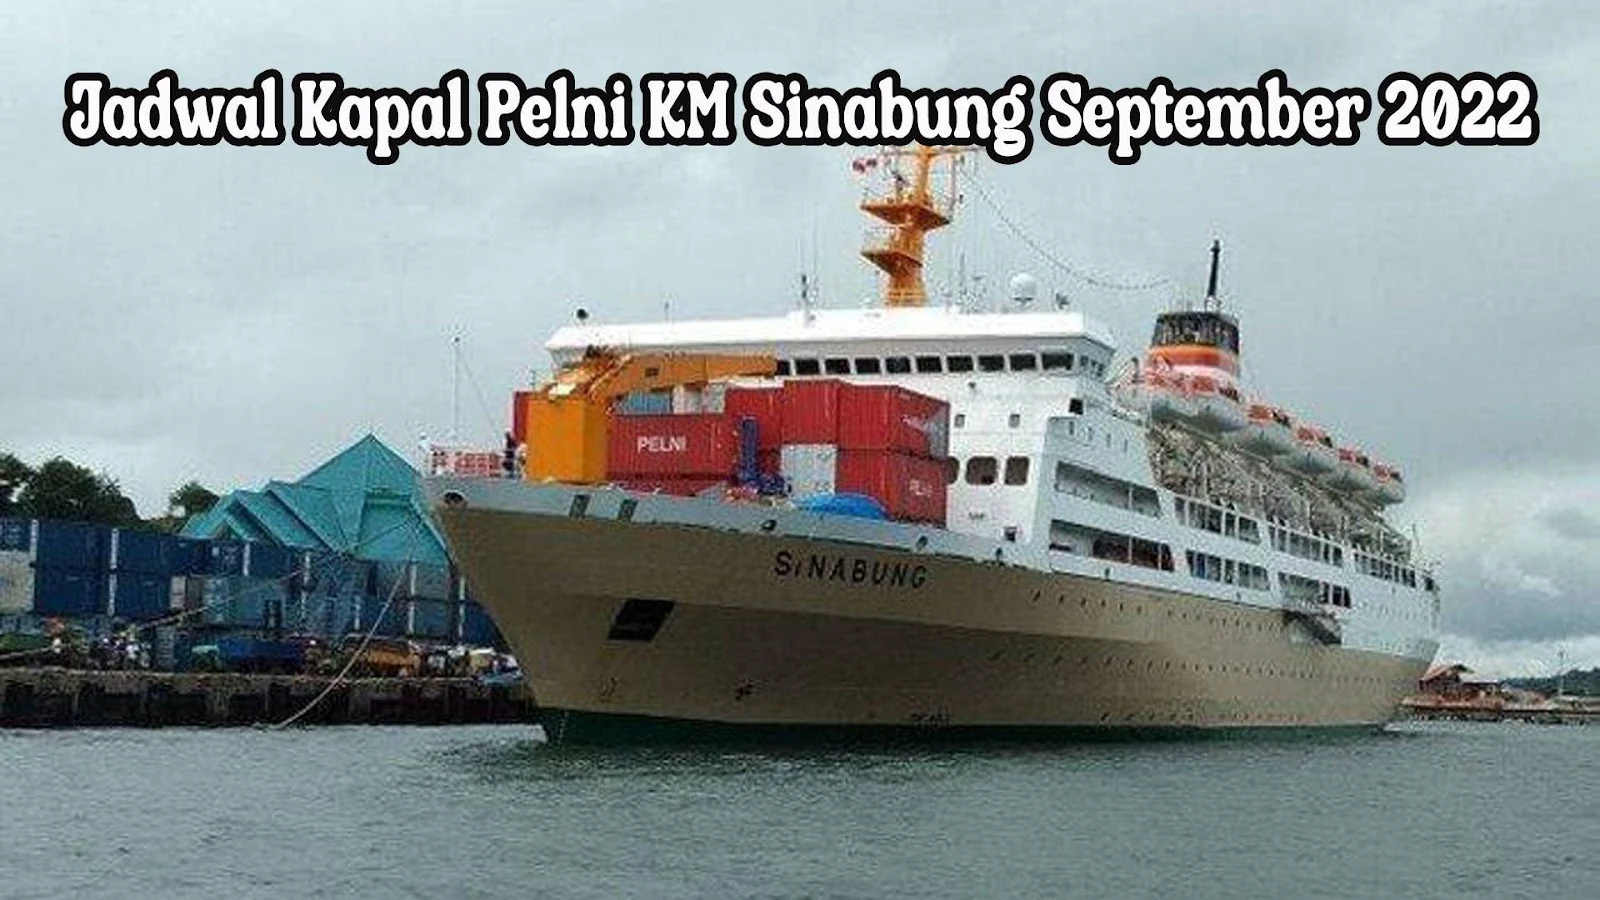 Jadwal Kapal Pelni KM Sinabung September 2022